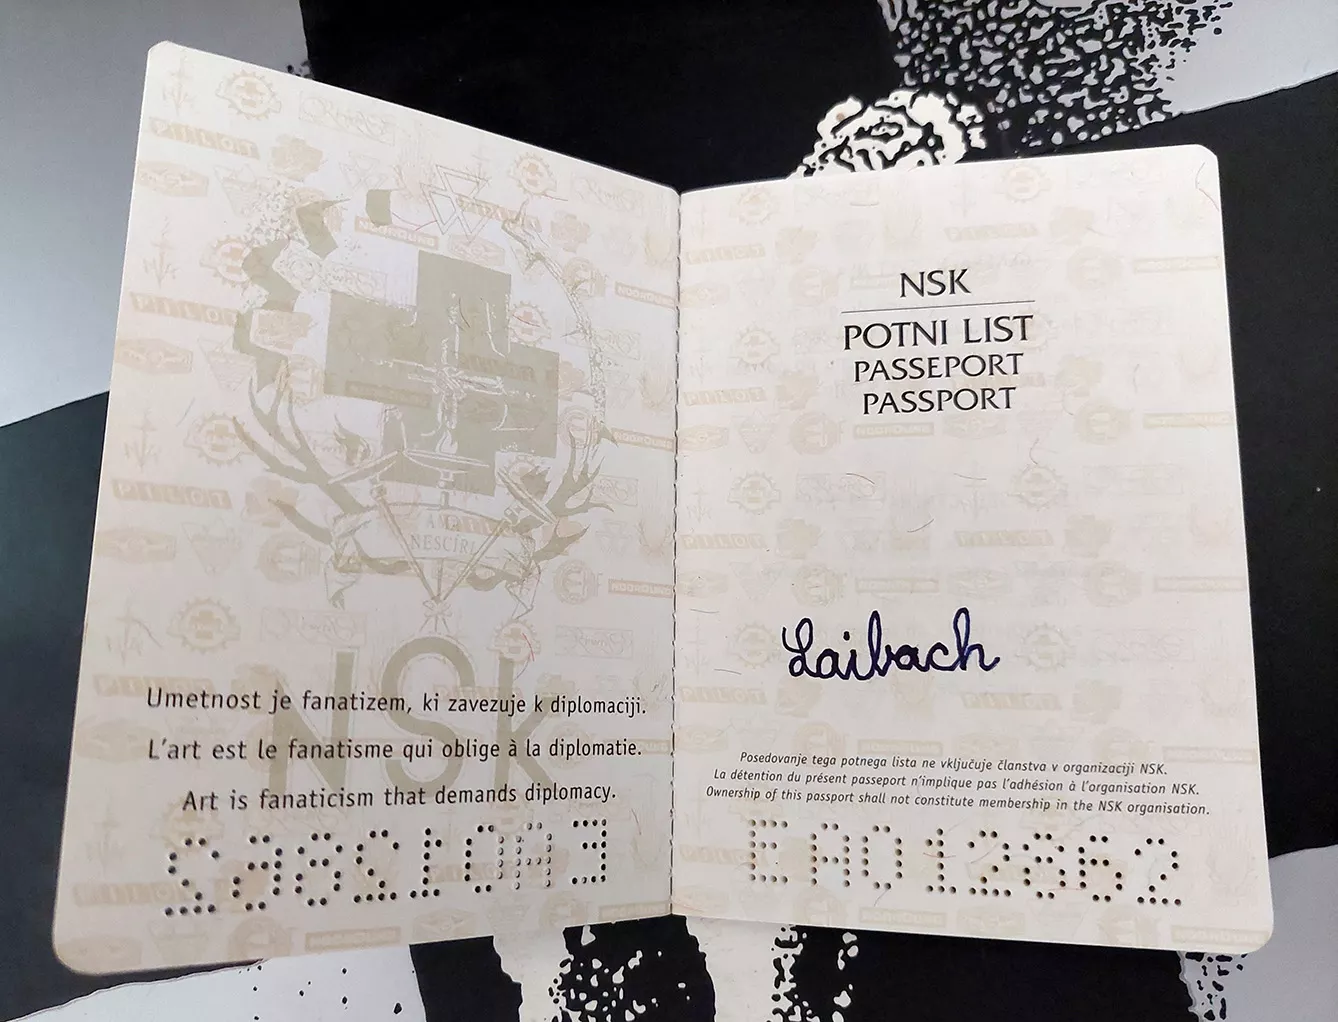 NSK State passport